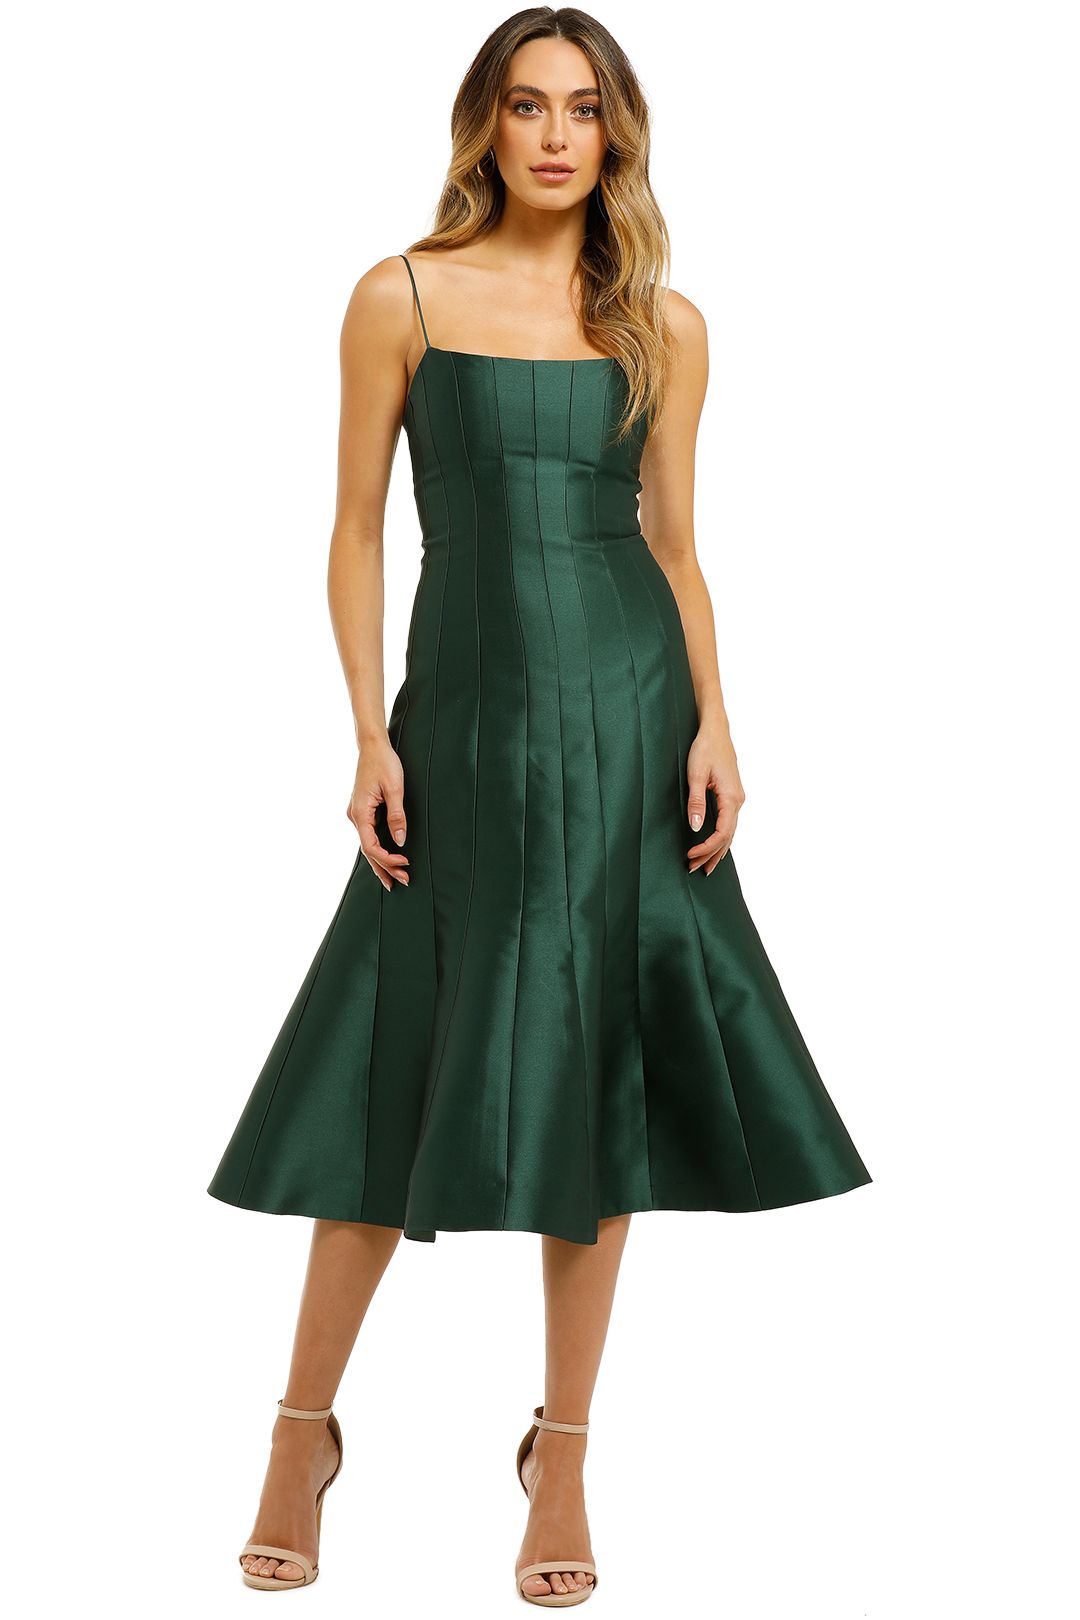 Thurley-Caspian-Dress-Bottle-Green-Front